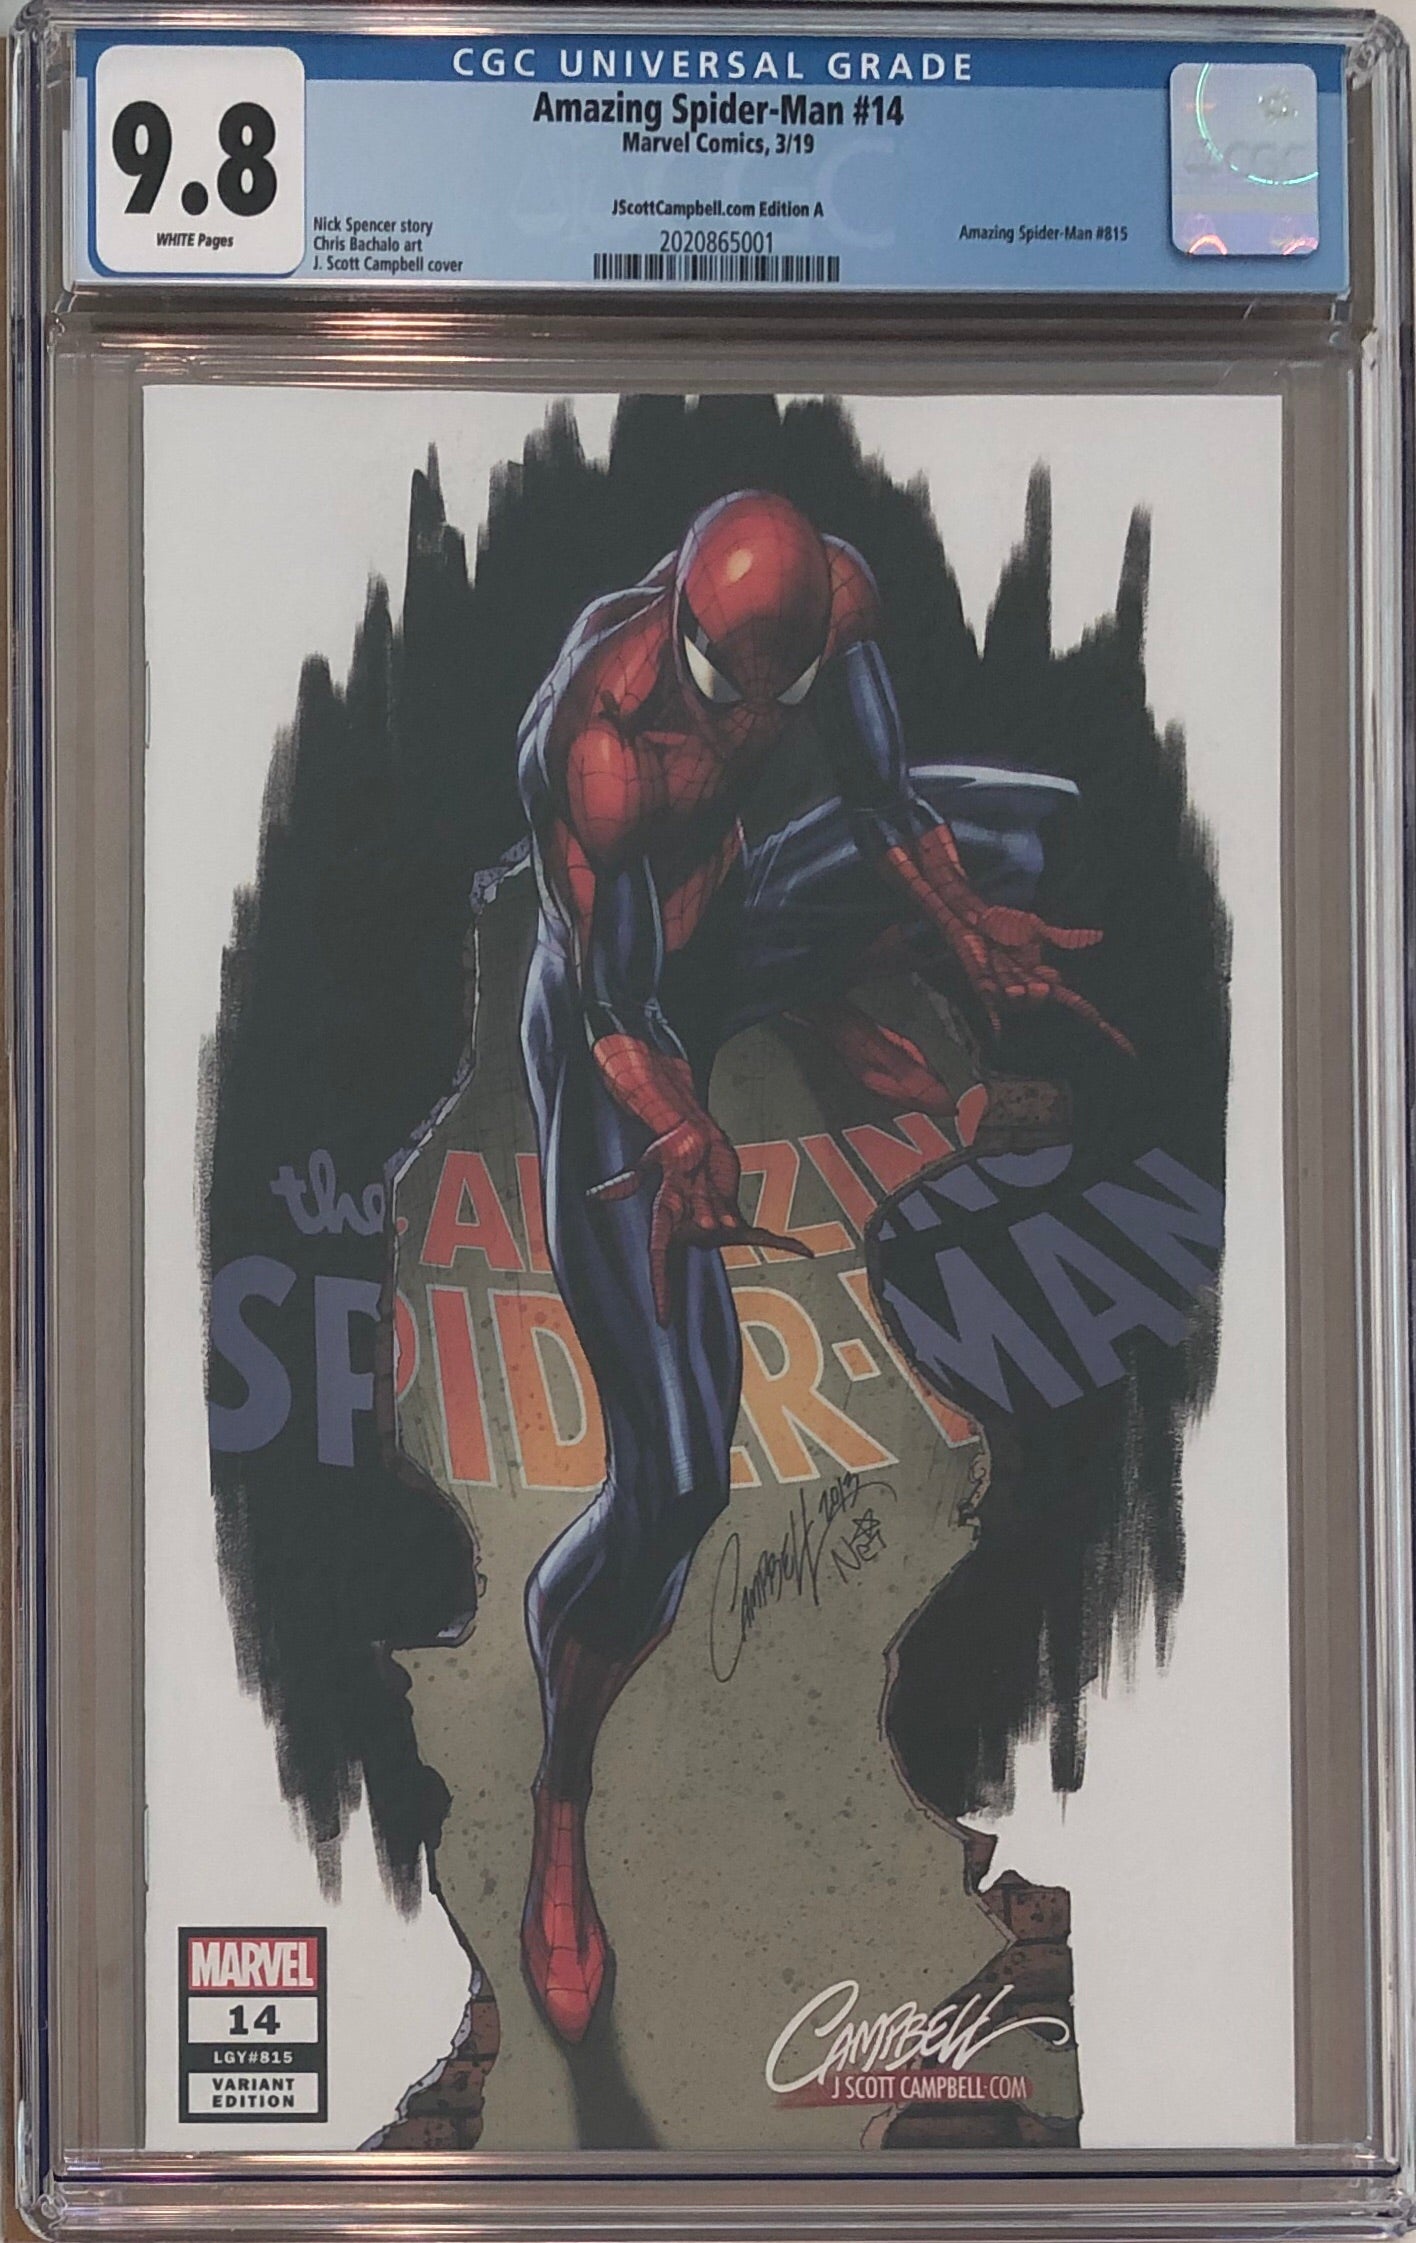 Amazing Spider-Man #14 J. Scott Campbell Edition A "Spider-Man" Exclusive CGC 9.8